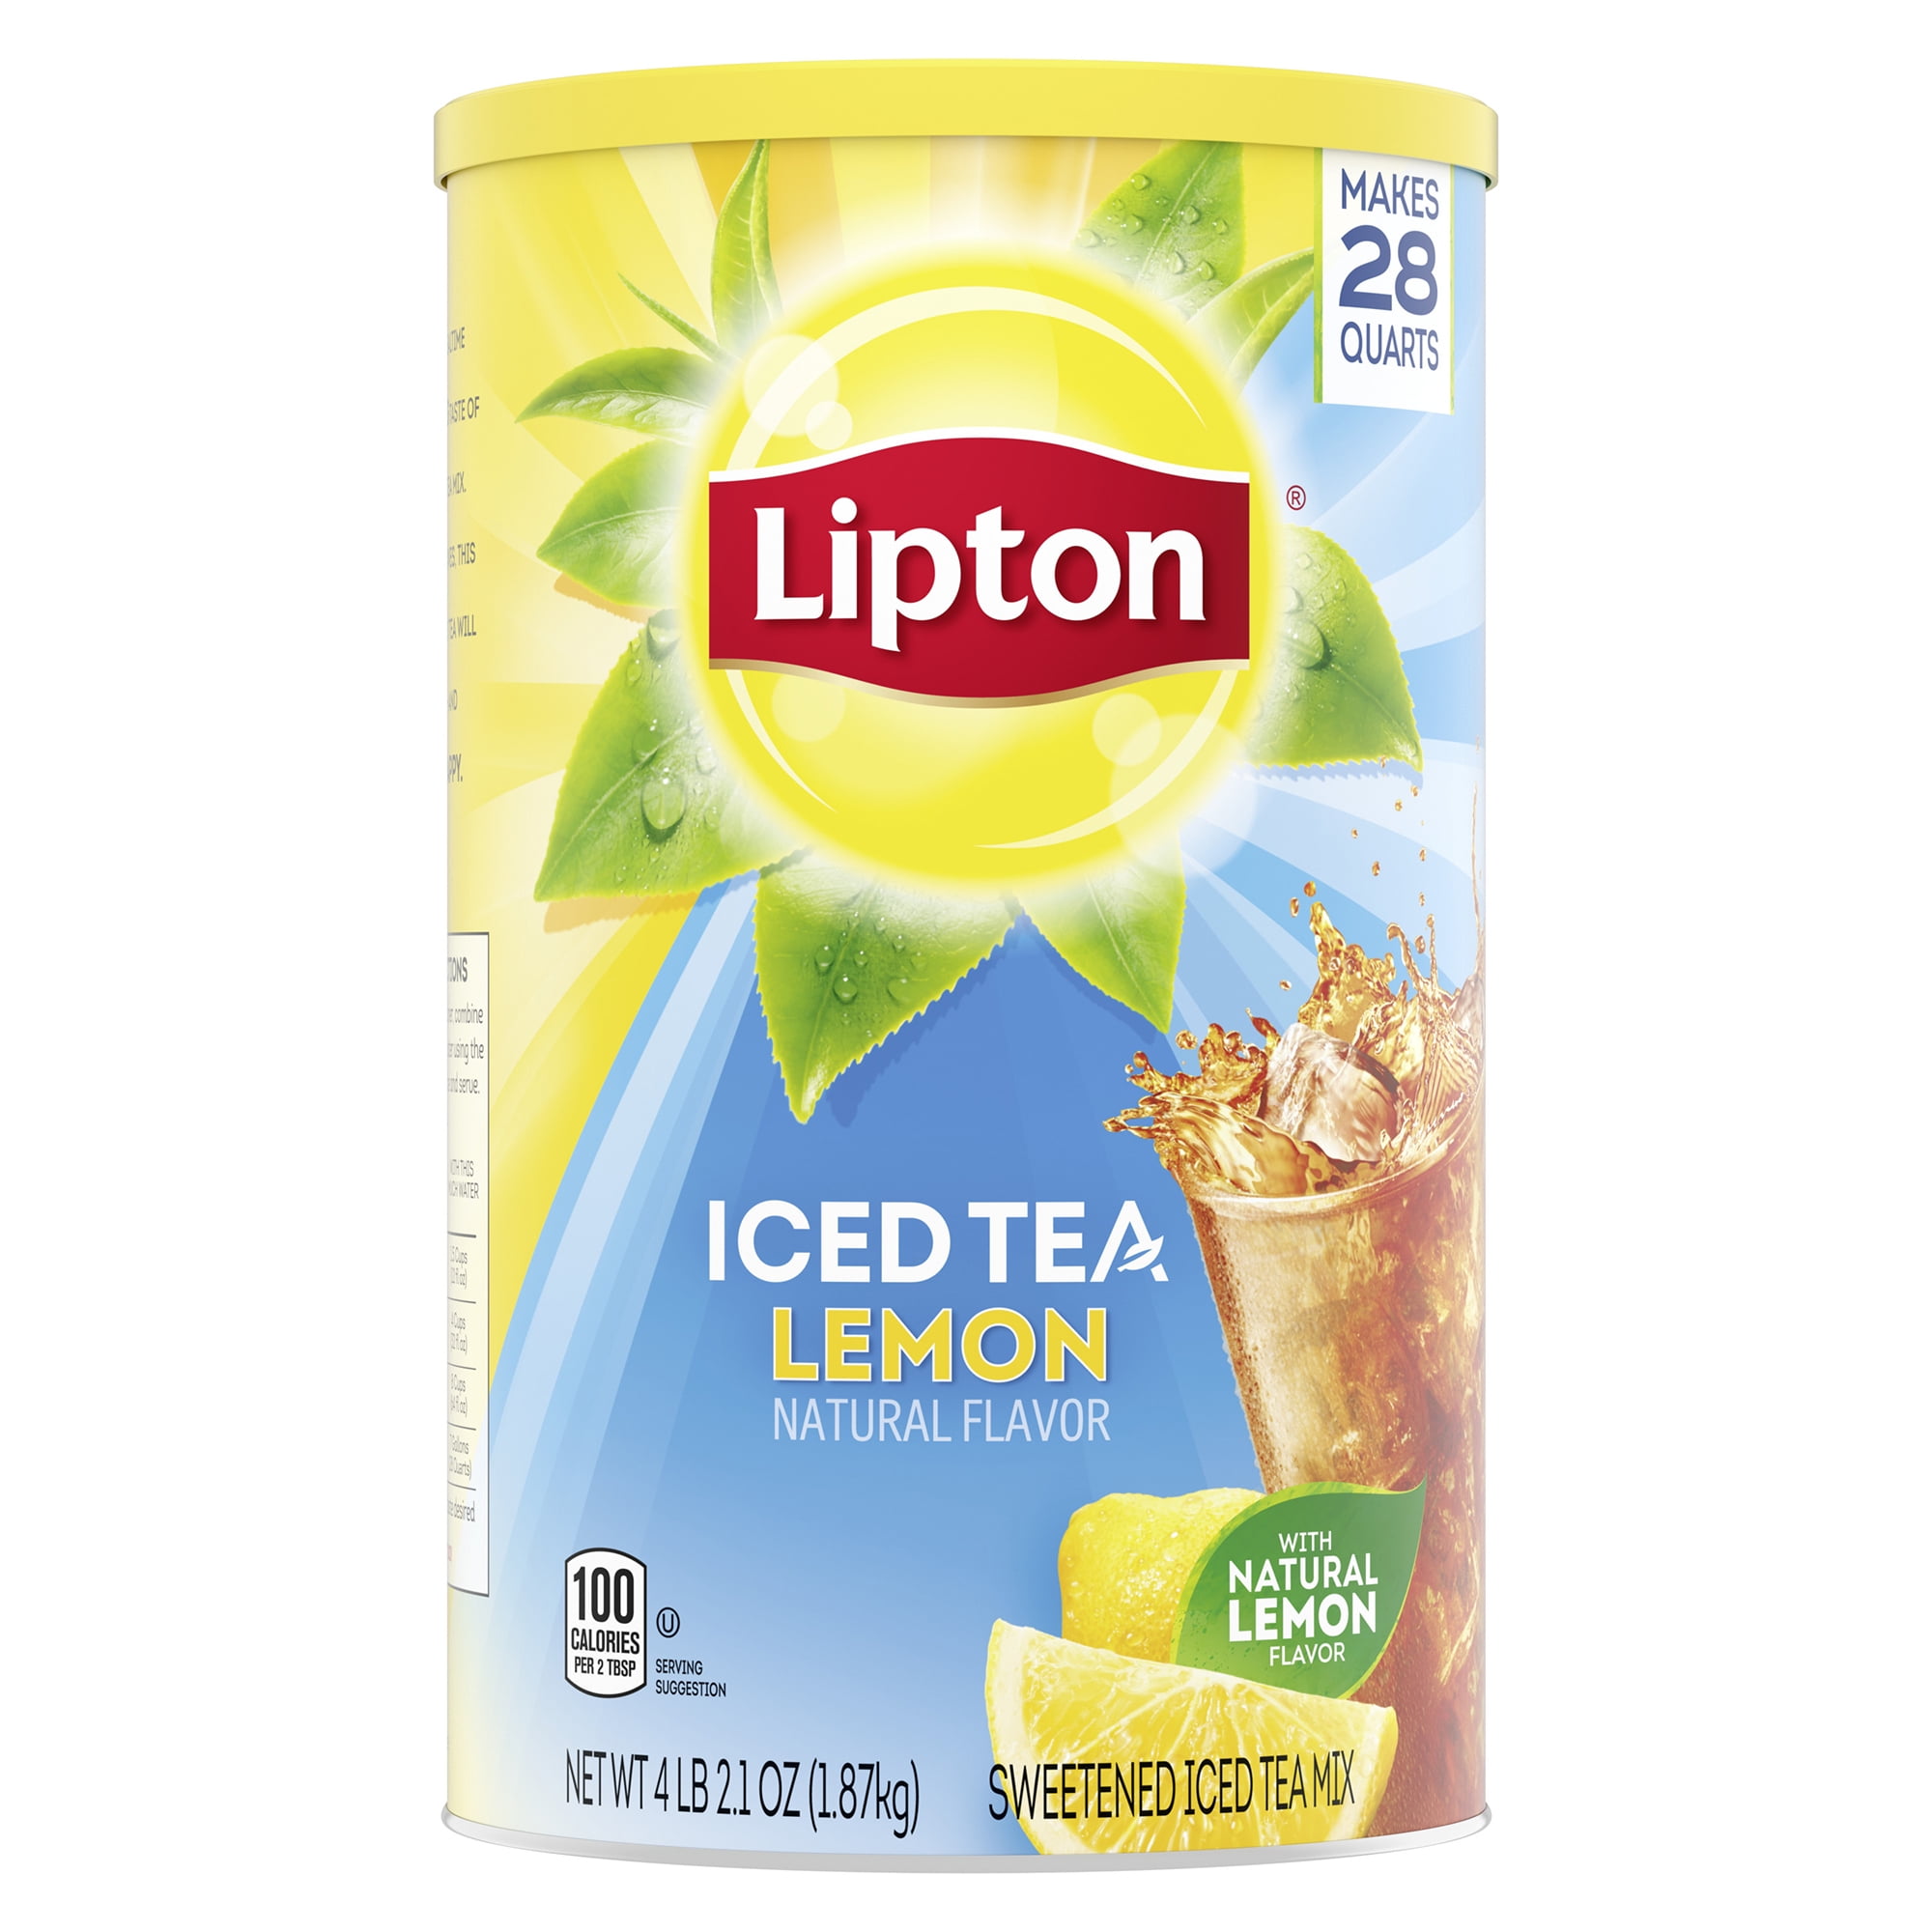 woonadres Actief Tussendoortje Lipton Iced Tea Mix Black Tea, Lemon, Caffeinated Makes 28 Quarts, 72 oz  Can - Walmart.com